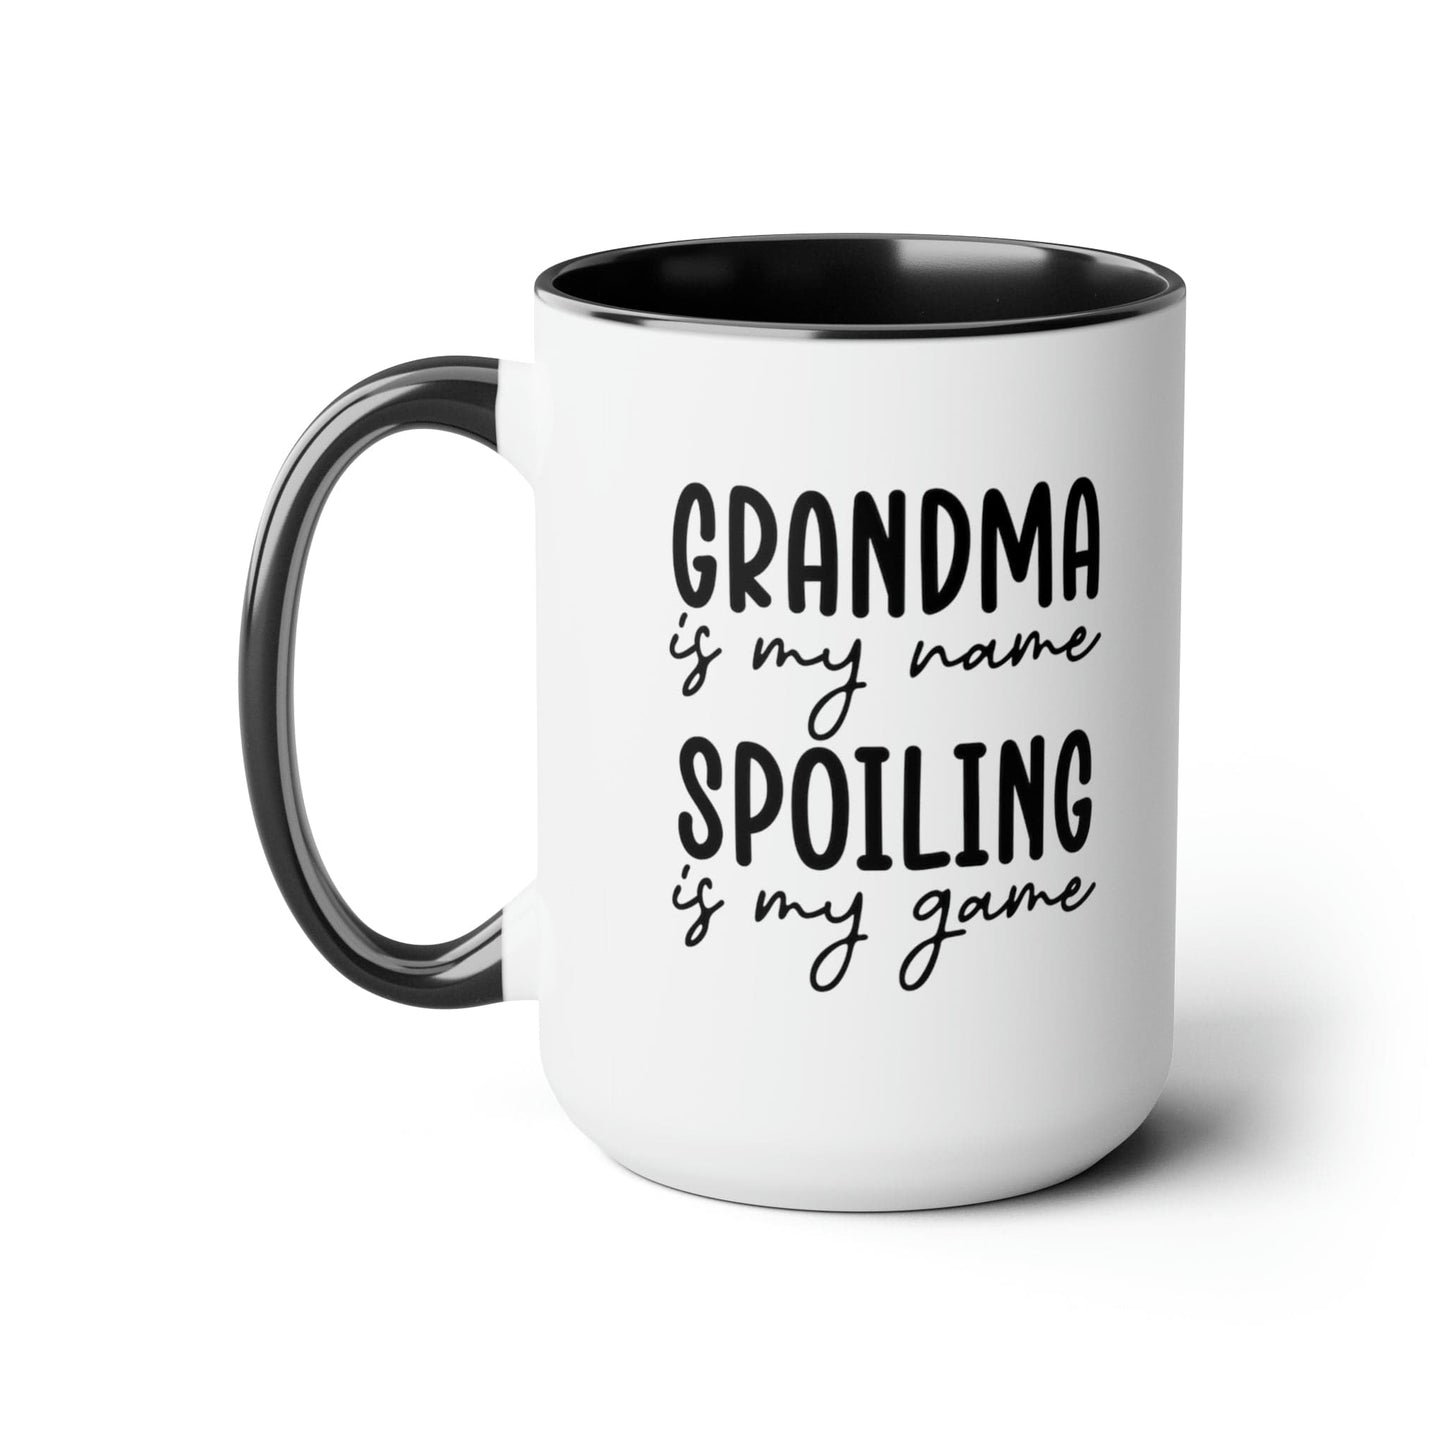 Grandma Is My Name Two-Tone Coffee Mugs, 15oz